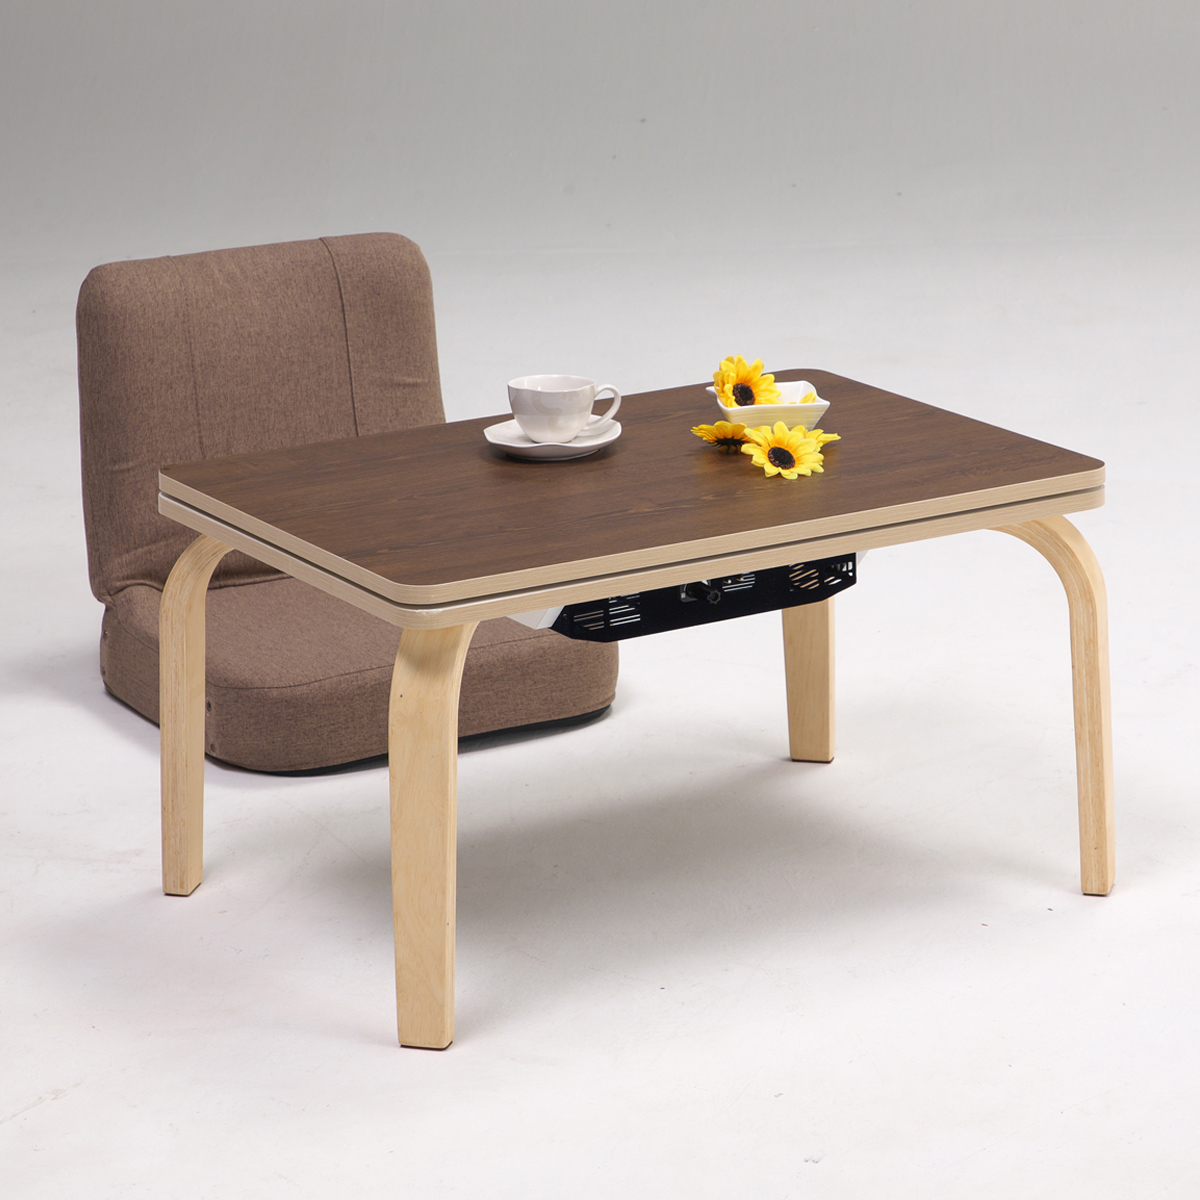 [ distribution free postage ] personal kotatsu set 1 person for W700 D500 H400*670 kotatsu kotatsu table ... desk desk wooden furniture all season natural / Brown 